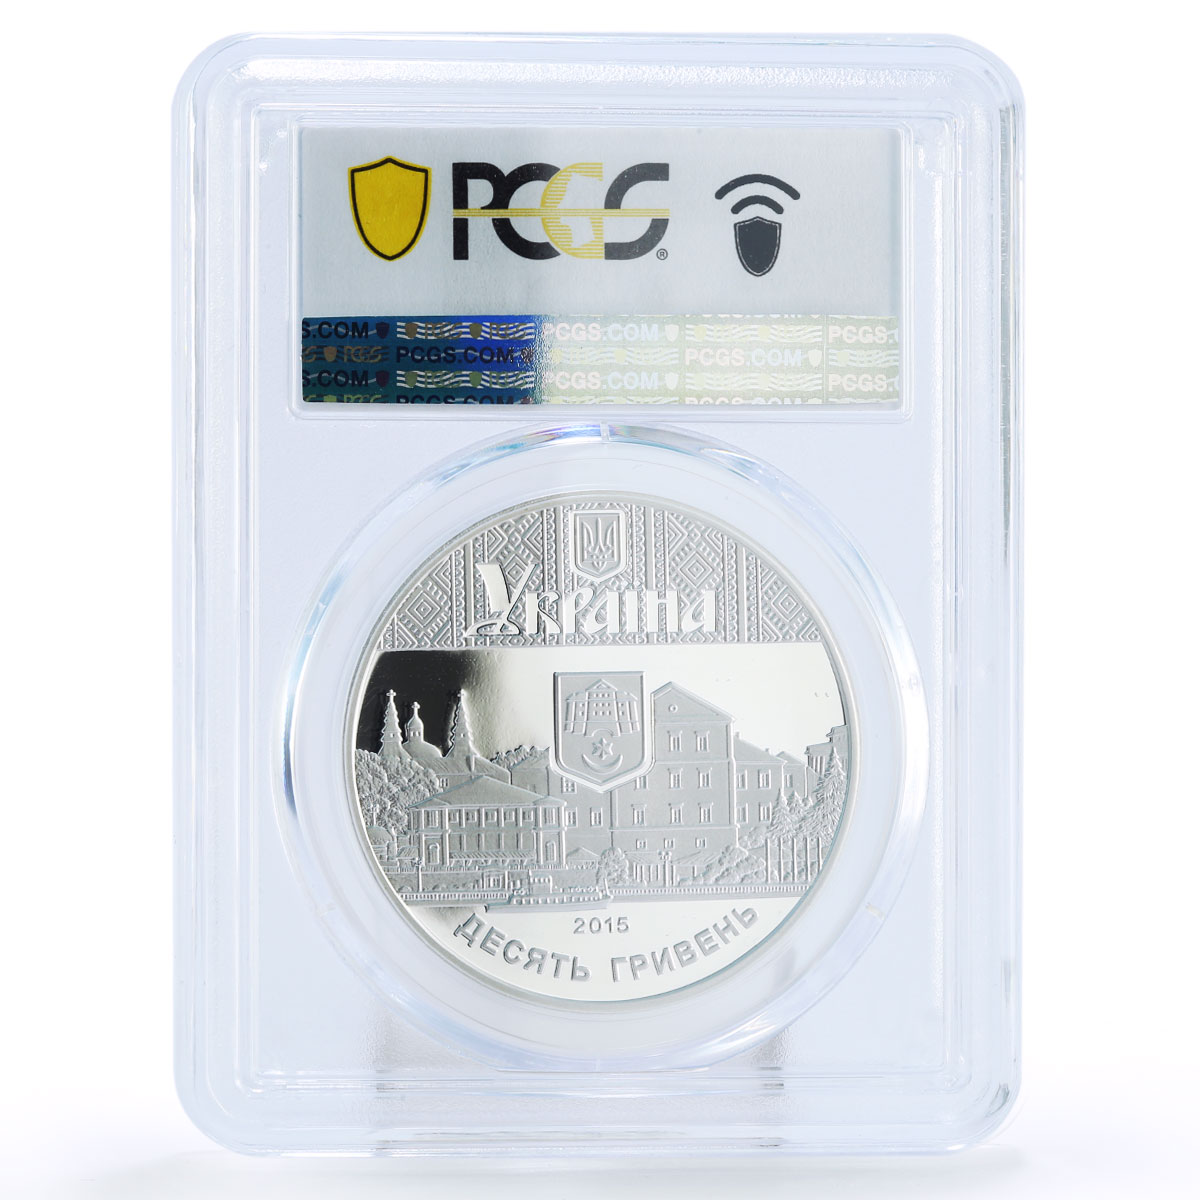 Ukraine 10 hryvnias 1st Written Mention Ternopil City PR69 PCGS silver coin 2015